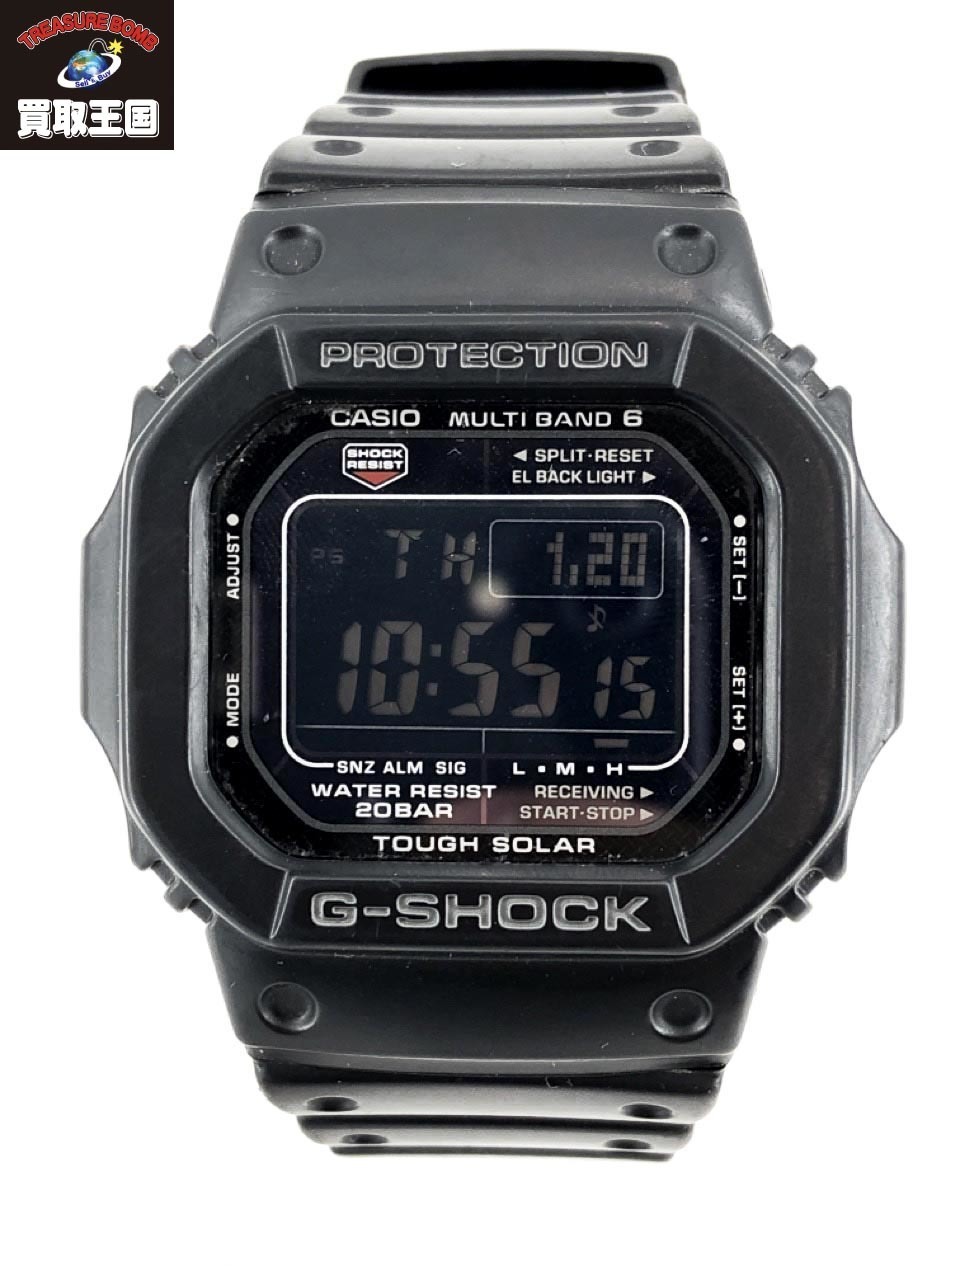 G-SHOC G-SHOCK GW-M5610 VERYGOOD #1EE0 | eBay